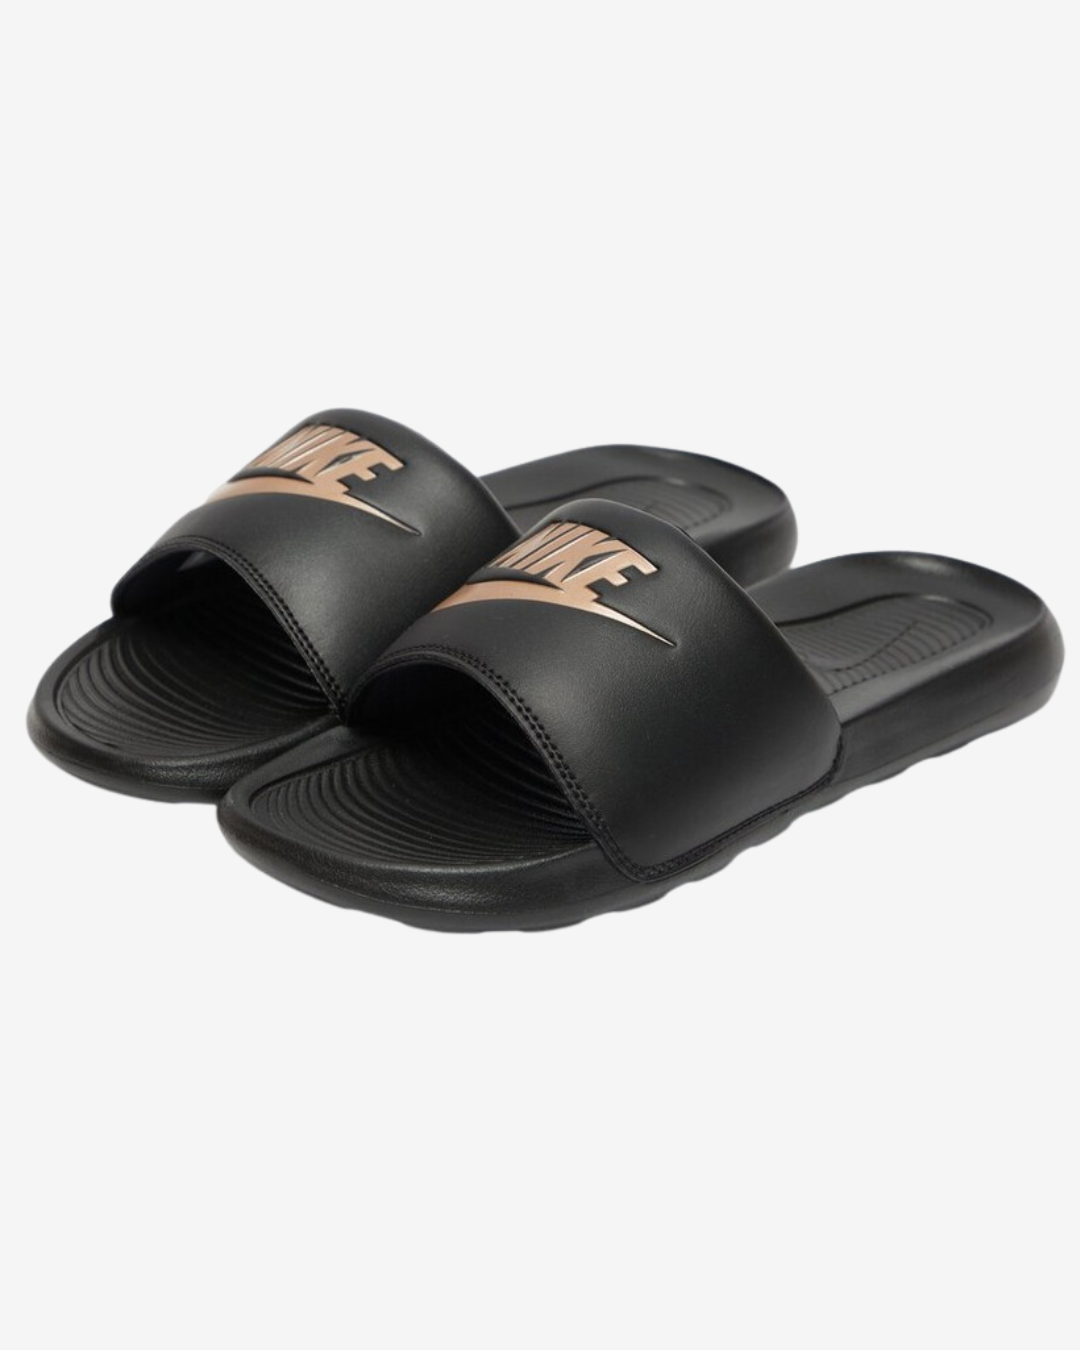 Se Nike Victori slippers - Sort / Bronze - Str. 44.5 - Modish.dk hos Modish.dk